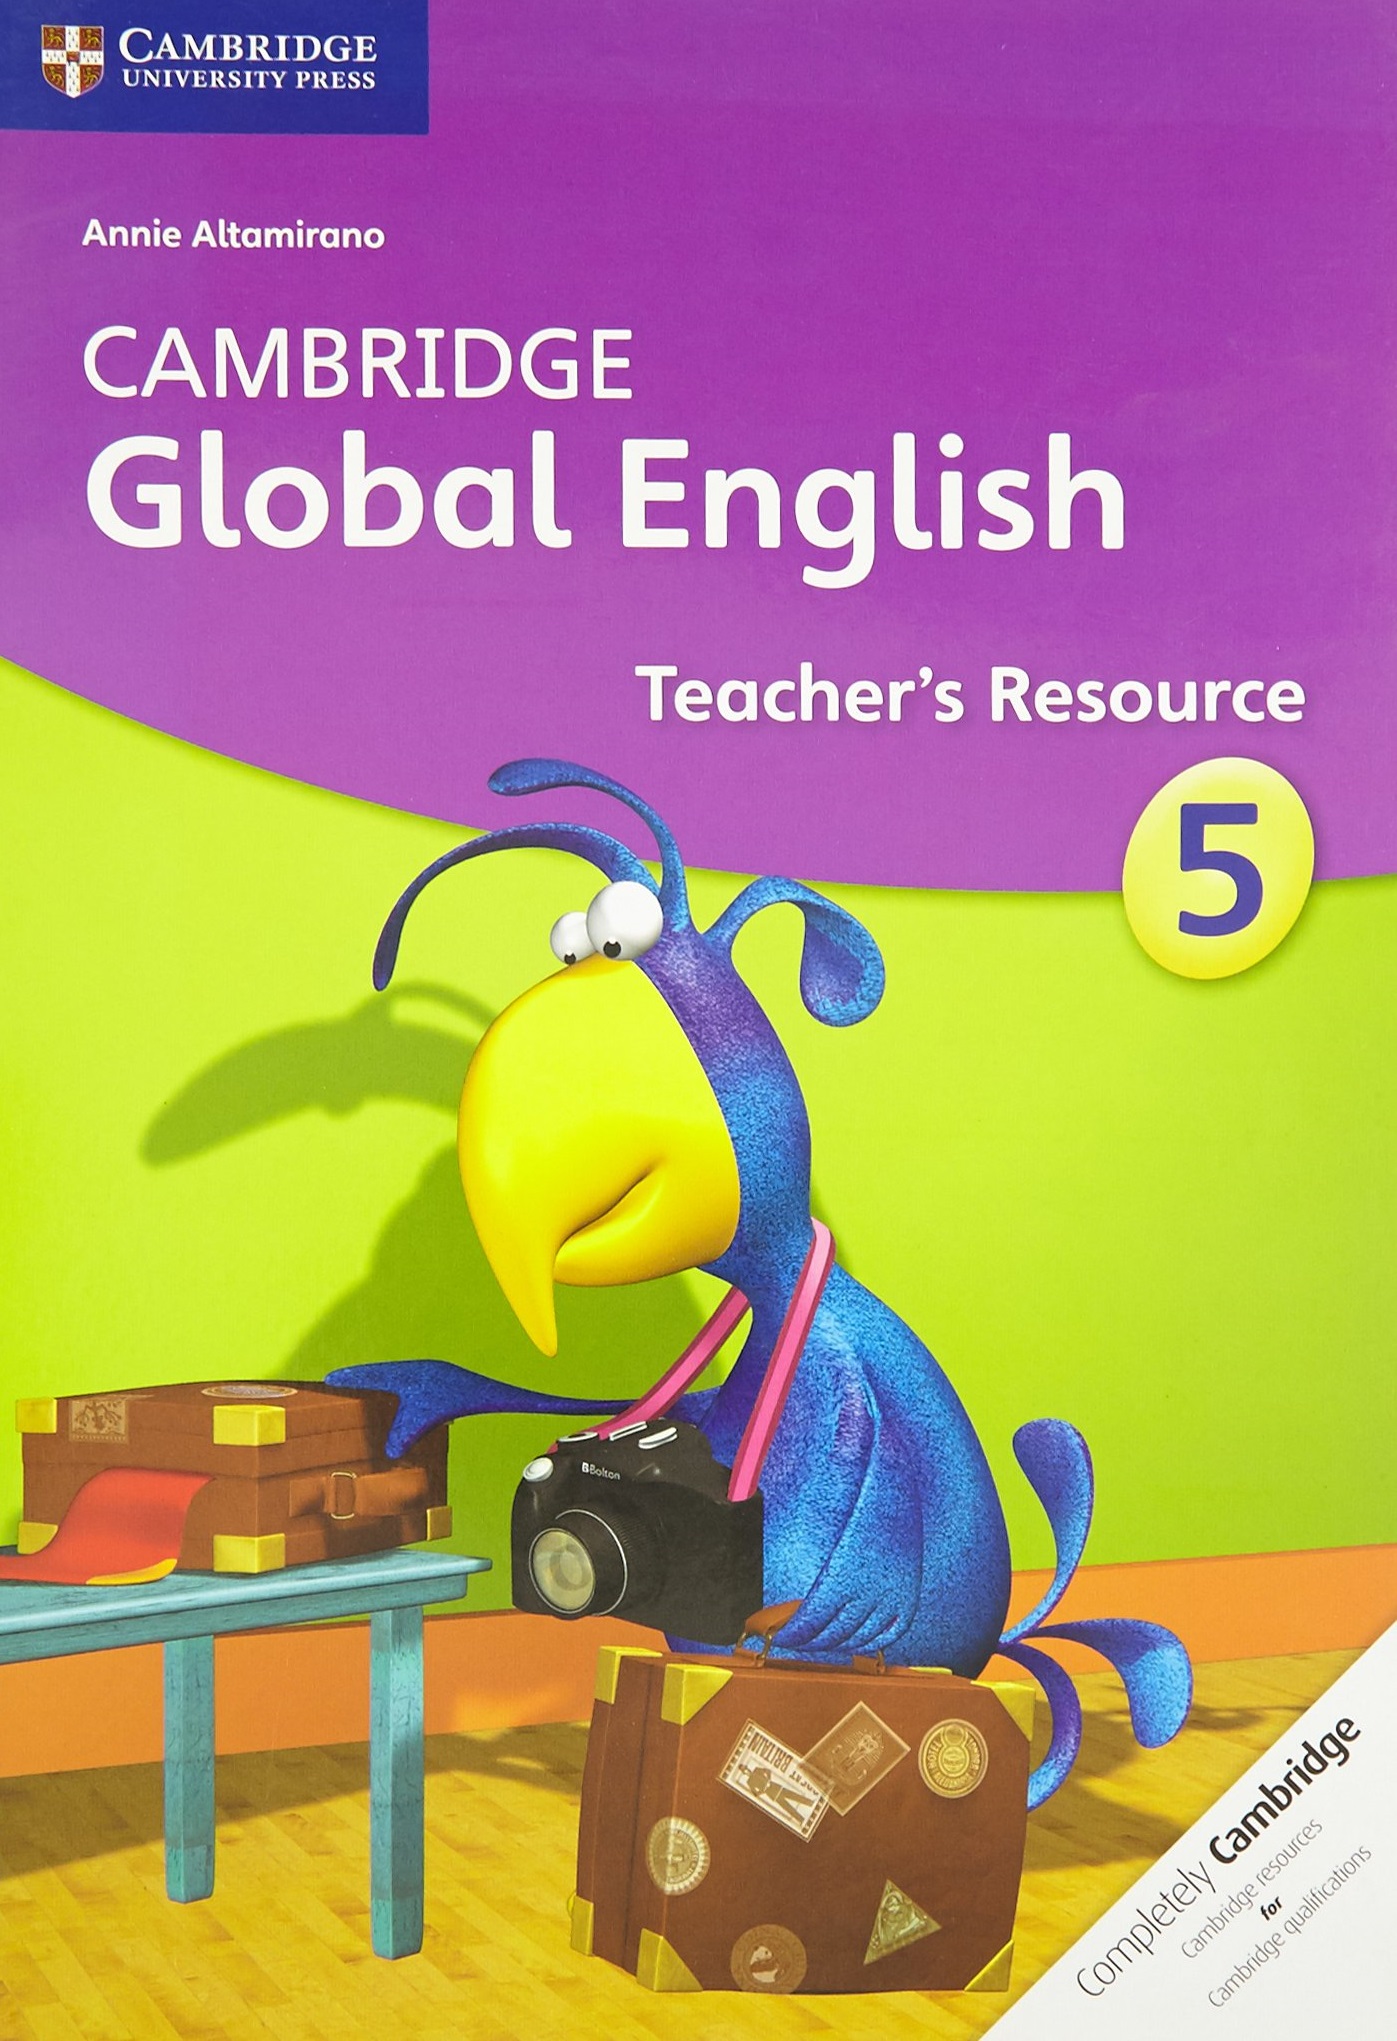 Cambridge teachers book. Cambridge Global English 5. Global English 5 Learners book. Global English учебник Cambridge. Cambridge books for Learning English.